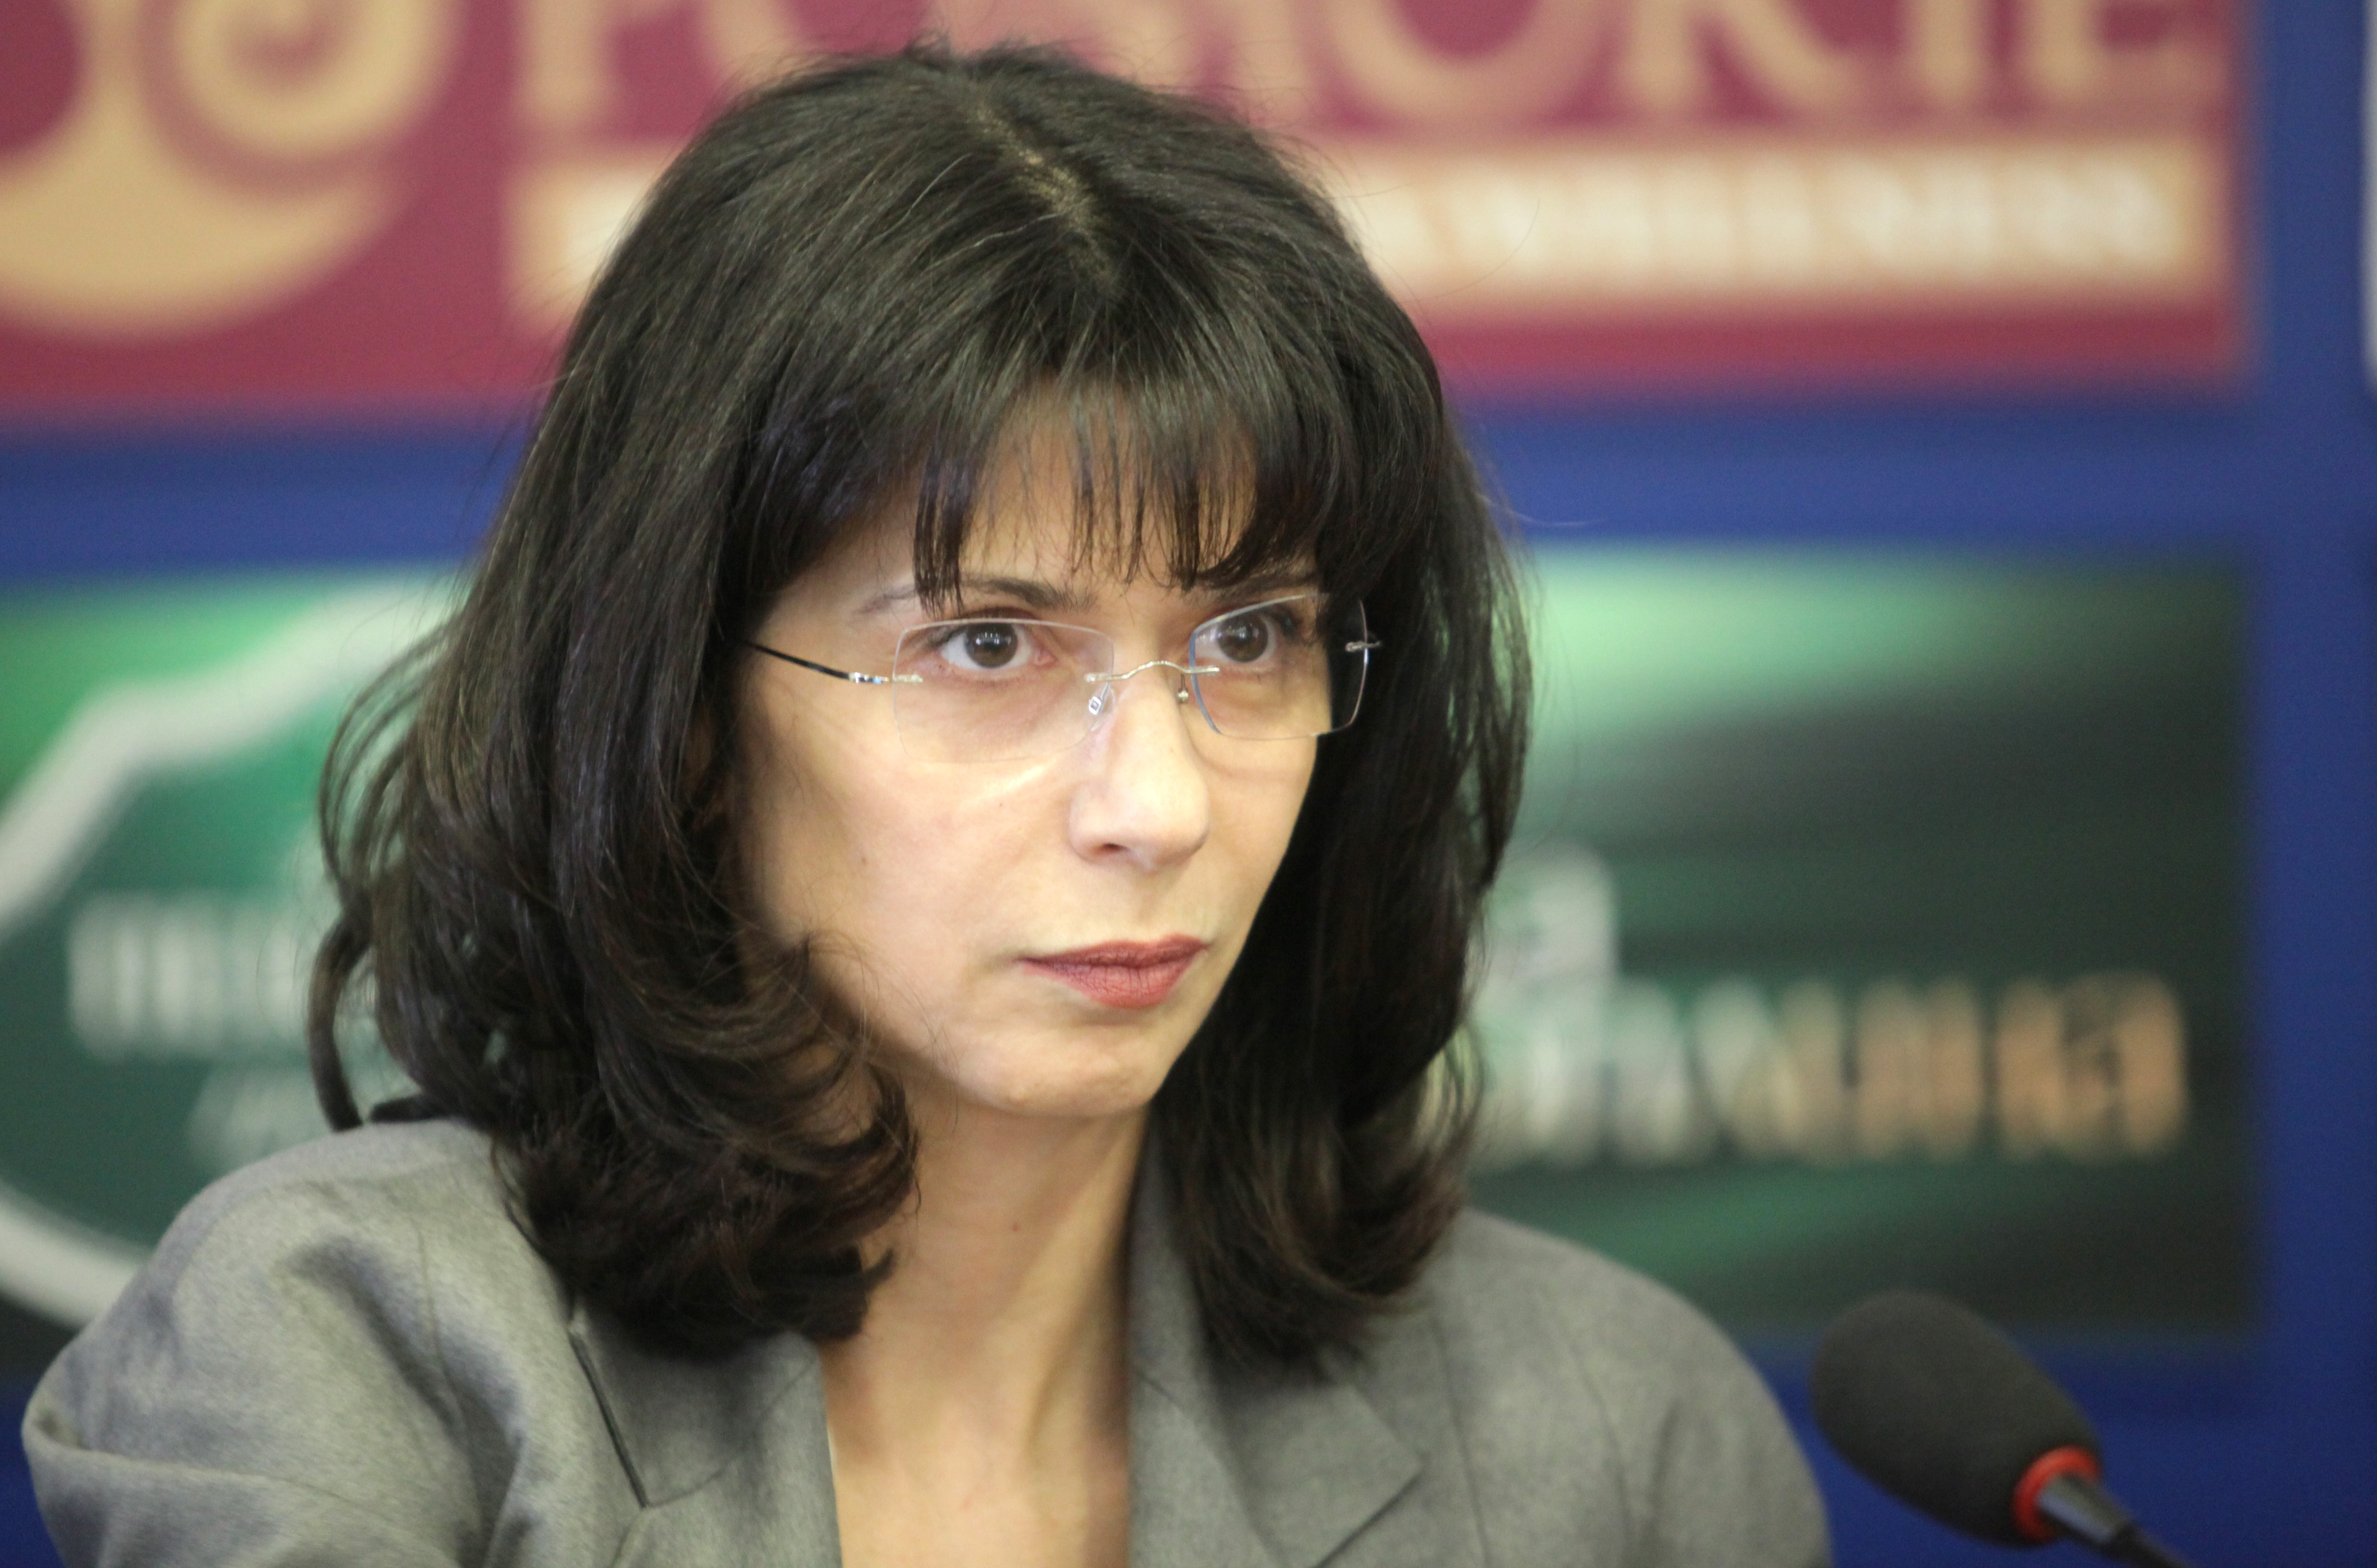 Моника Янова се закани да съди министри заради скандала ”Хохегер”